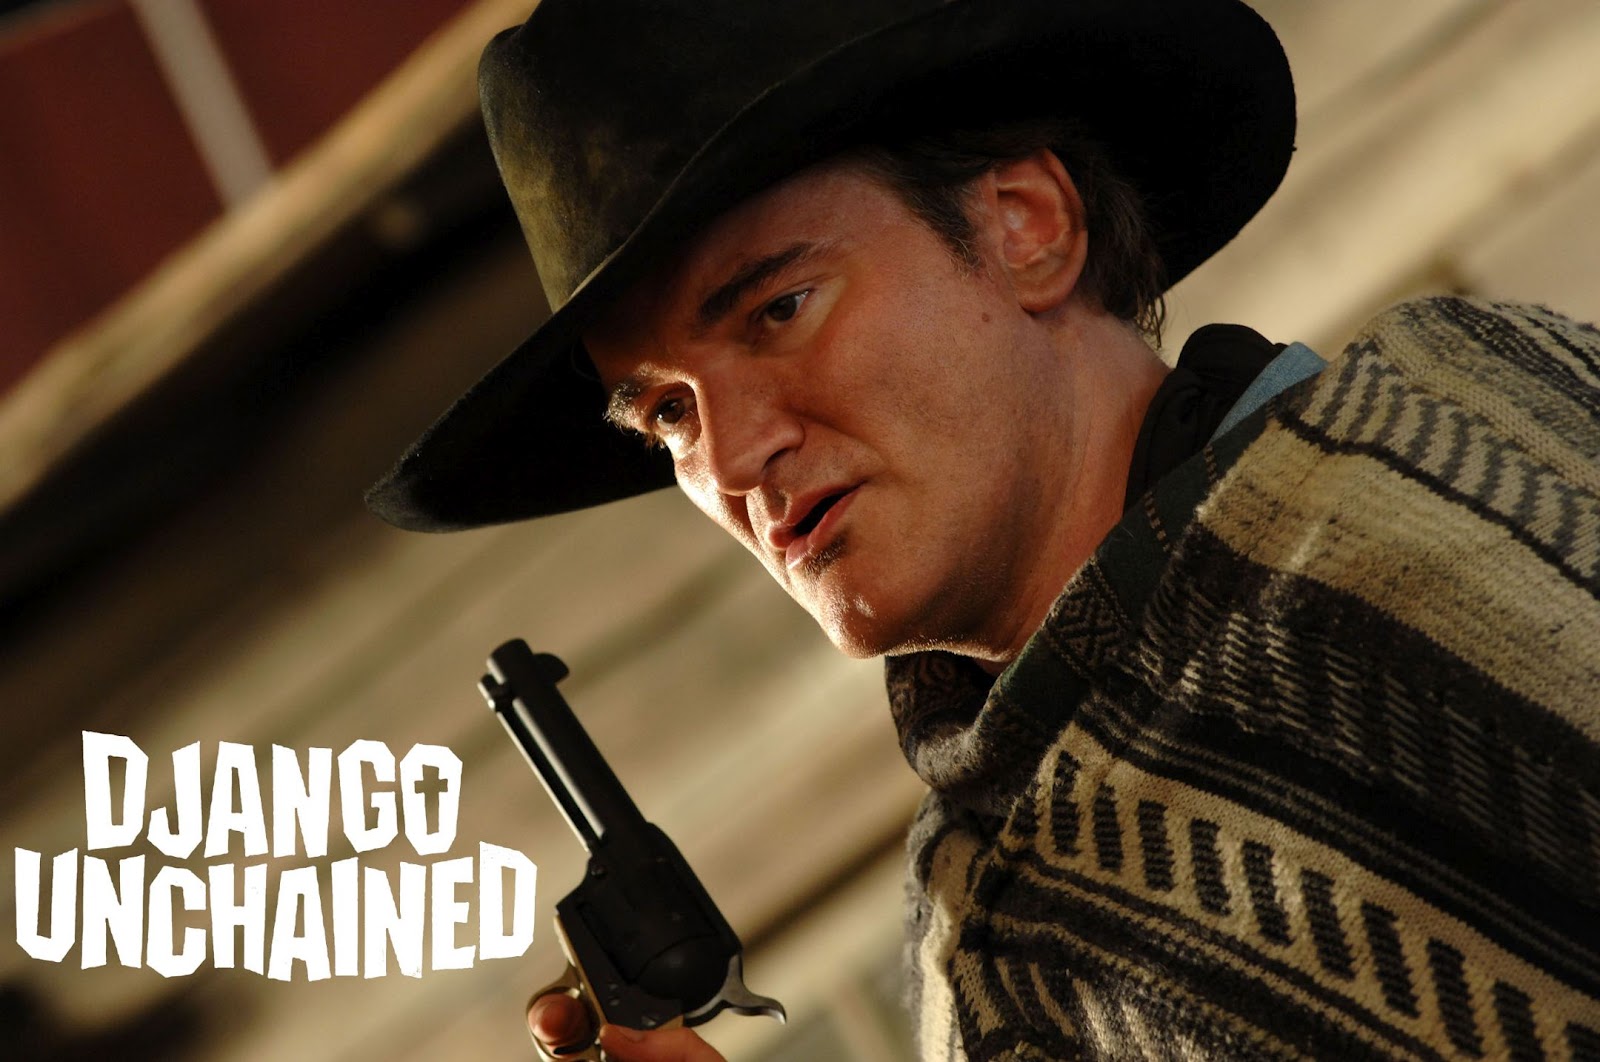 Quentin Tarantino Django Unchained